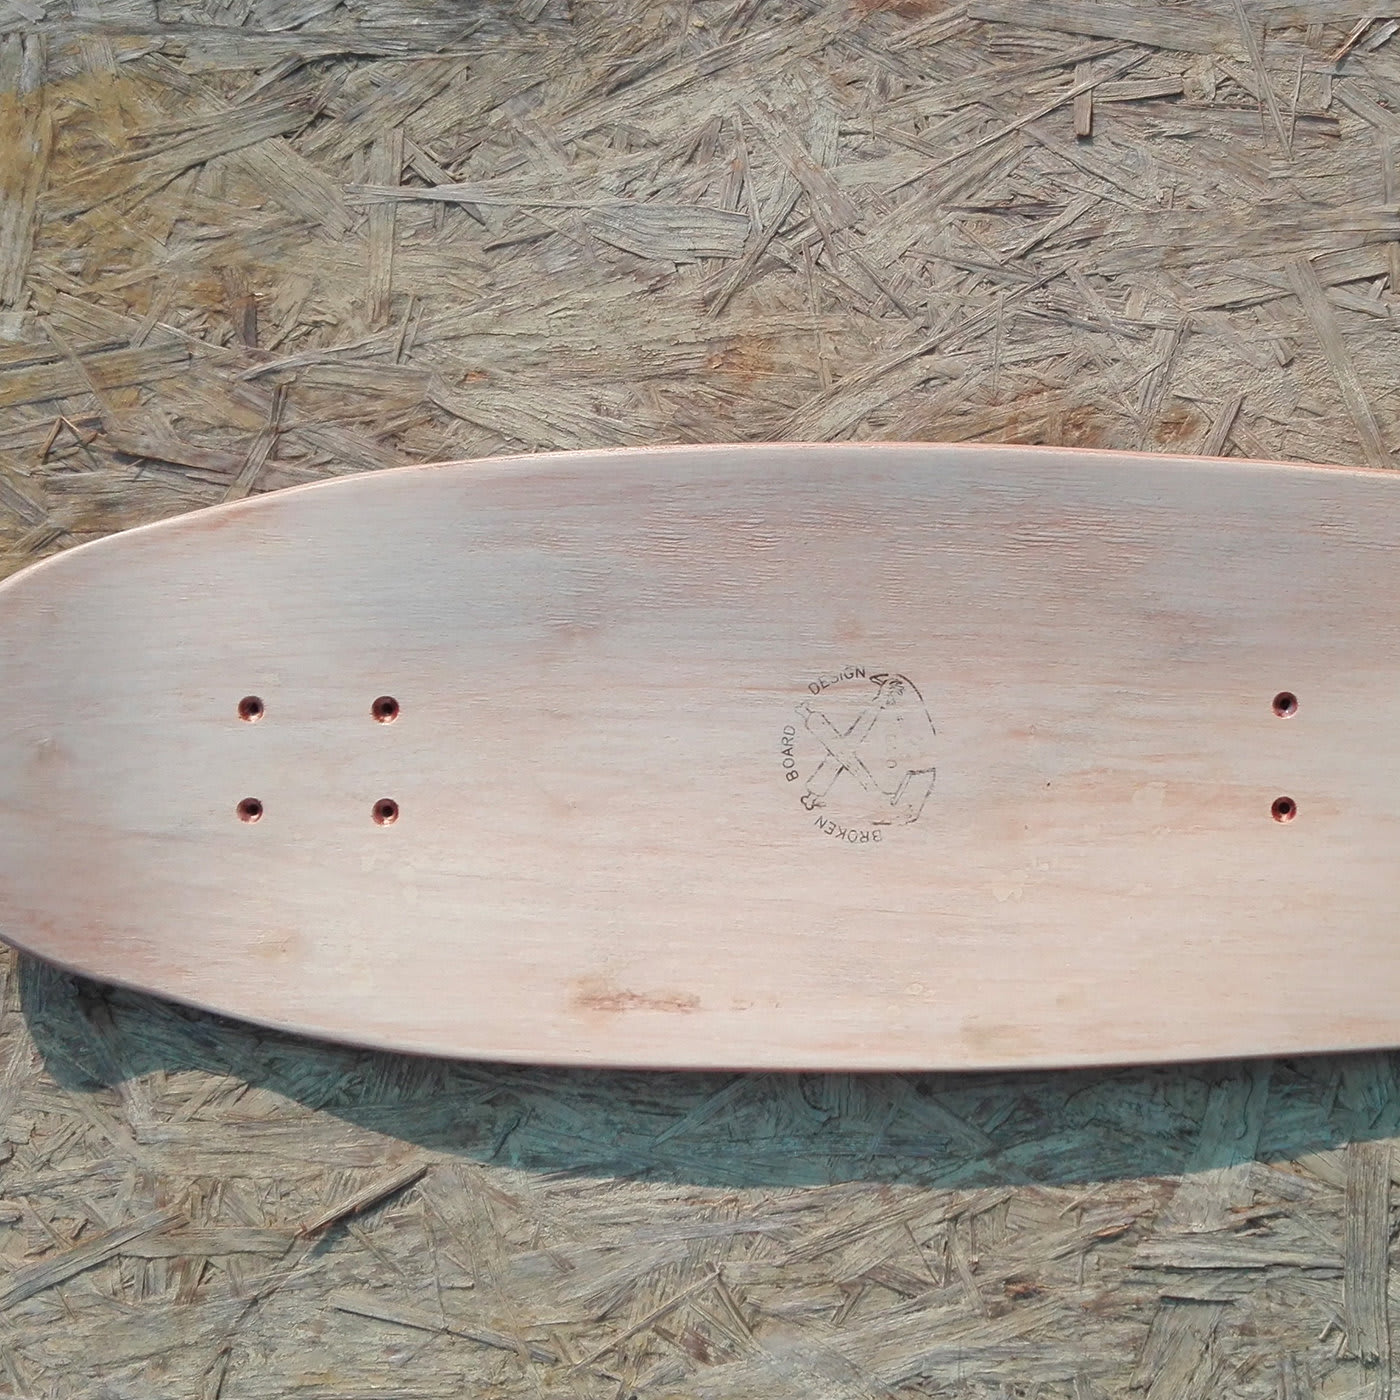 Mandello Cruiser # 6 - Broken Board Design